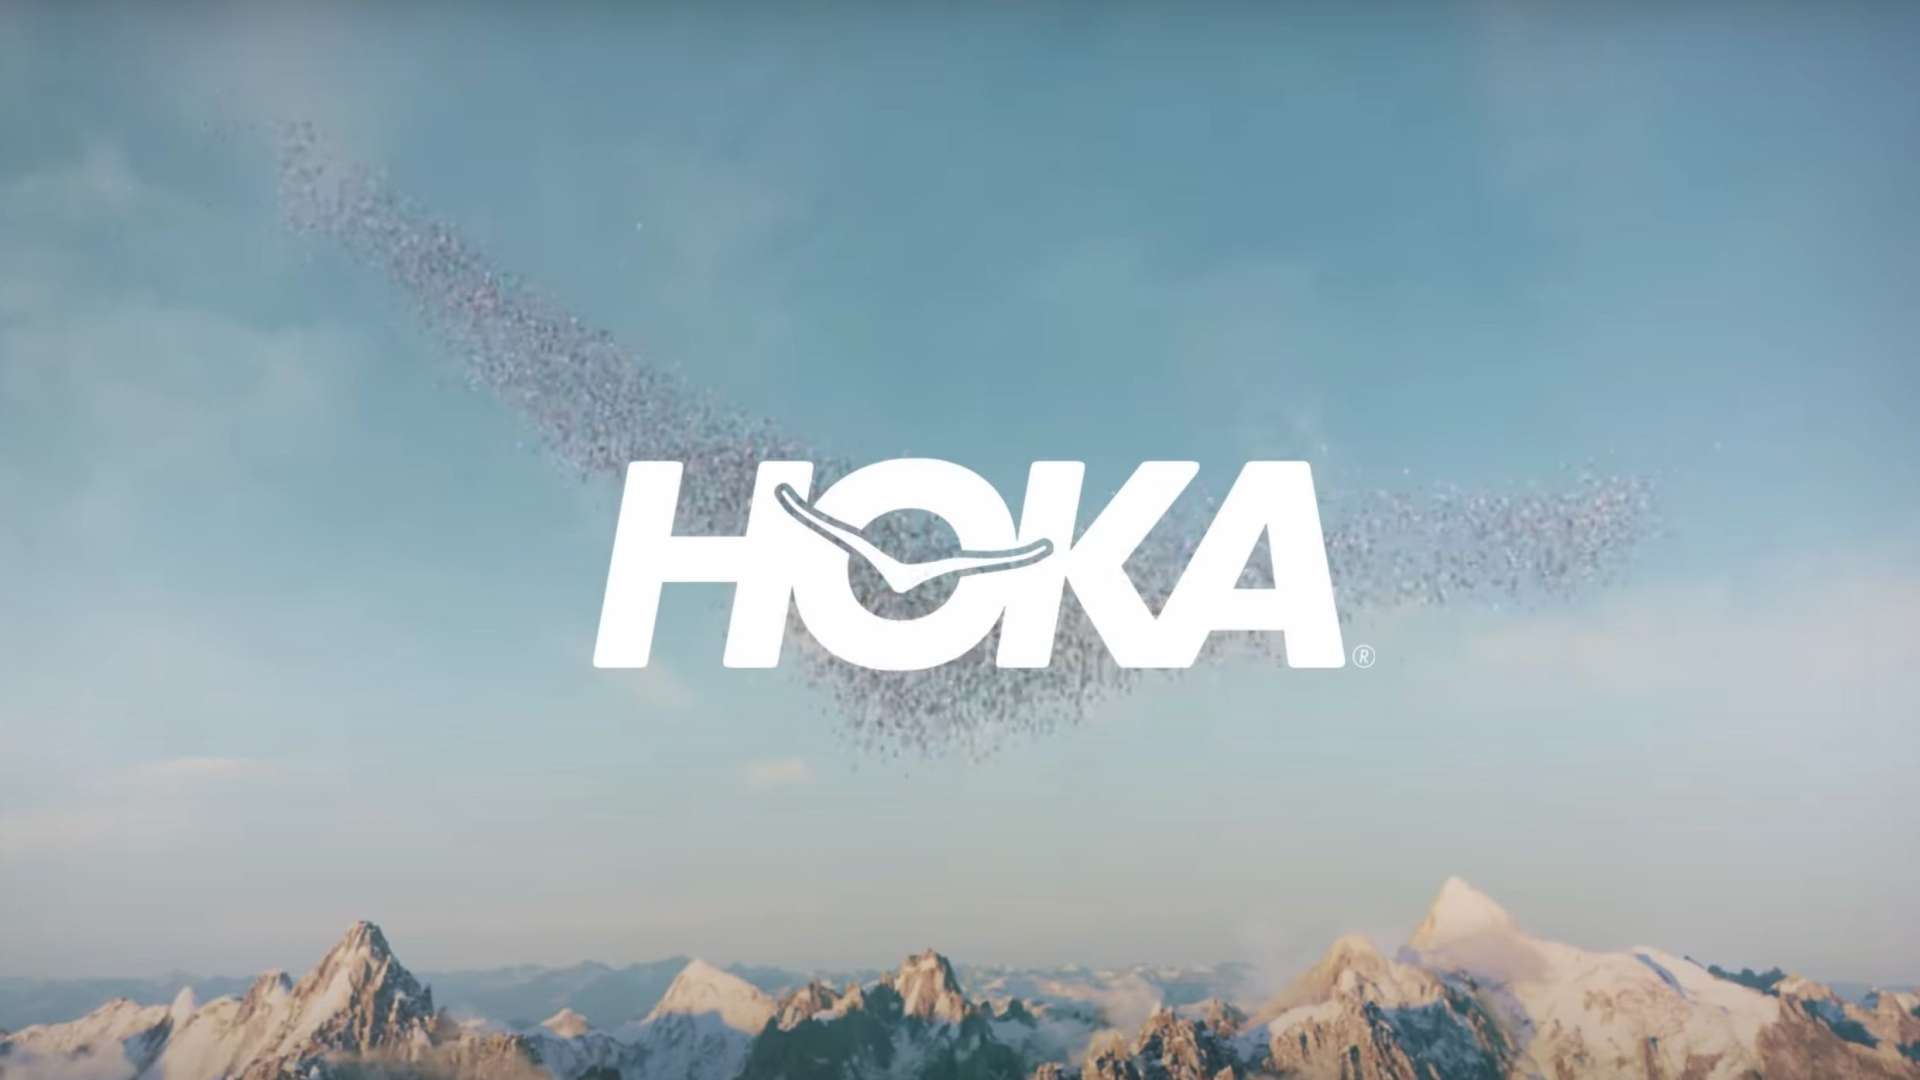 《HOKA》让我们一起飞翔